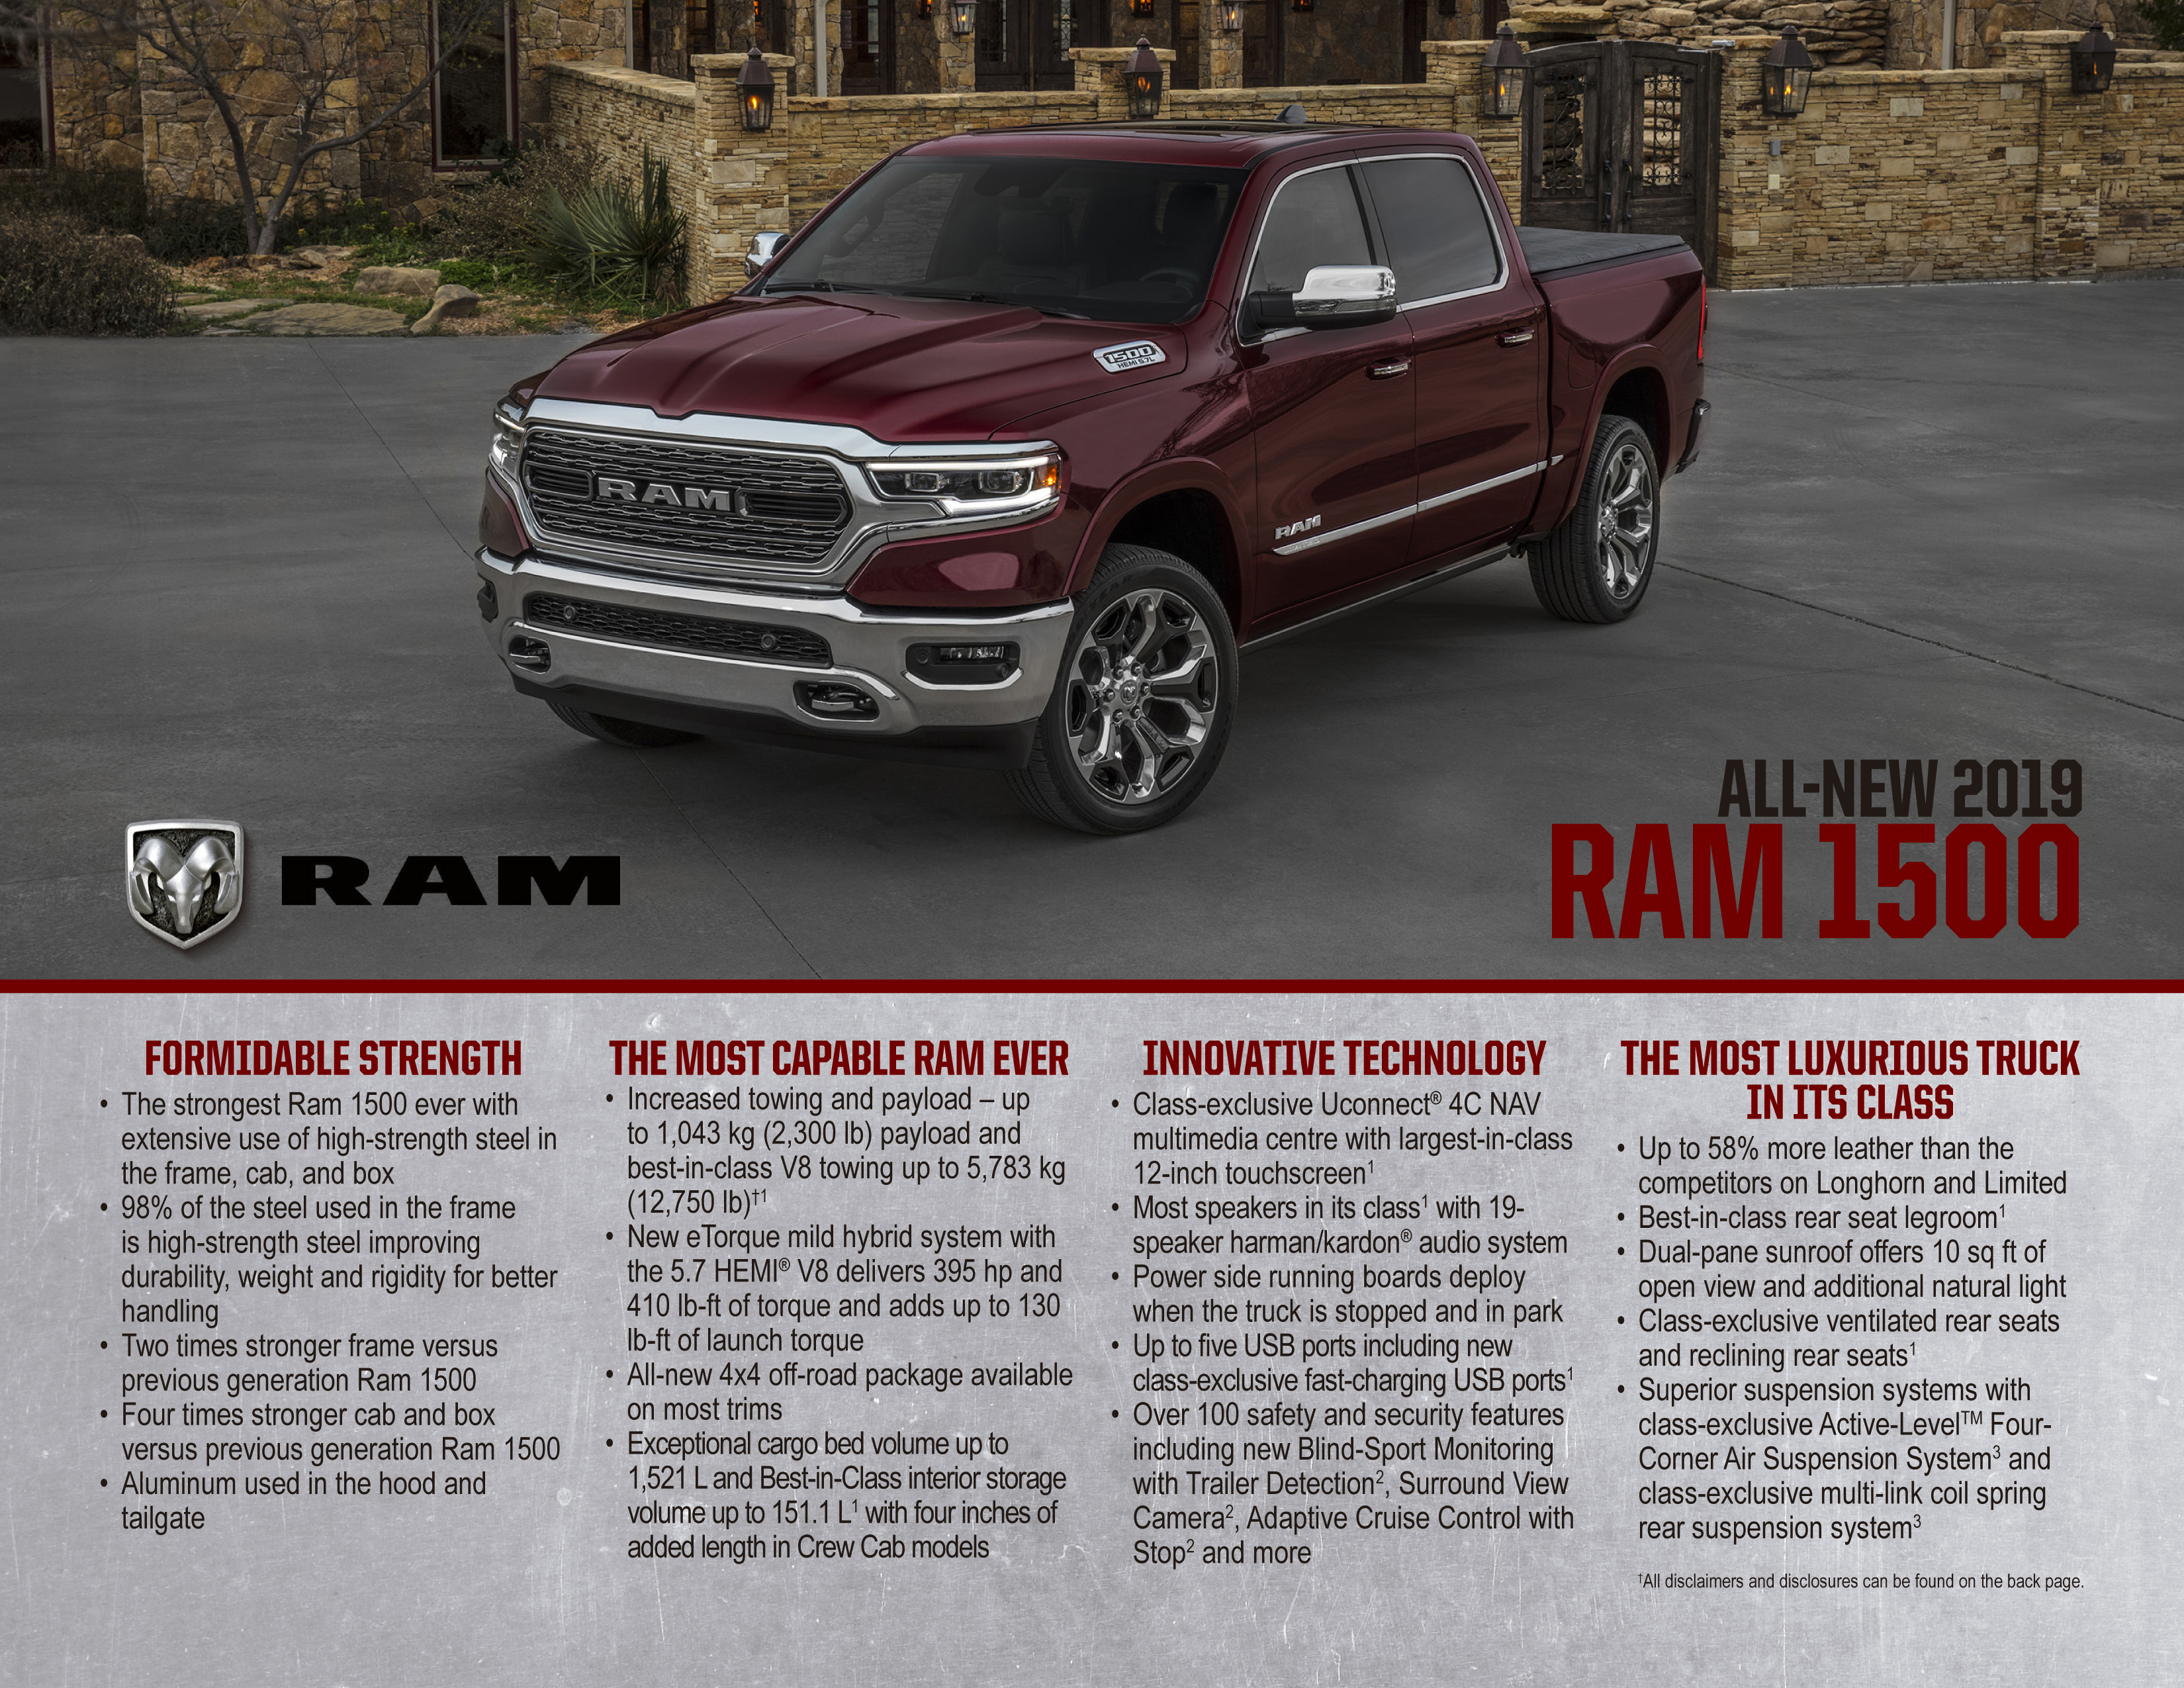 Ram размеры. Dodge Ram 1500 2019 габариты кузова. Dodge Ram 1500 2019 габариты. Ram 1500 length. Dodge Ram 1500 габариты кузова.